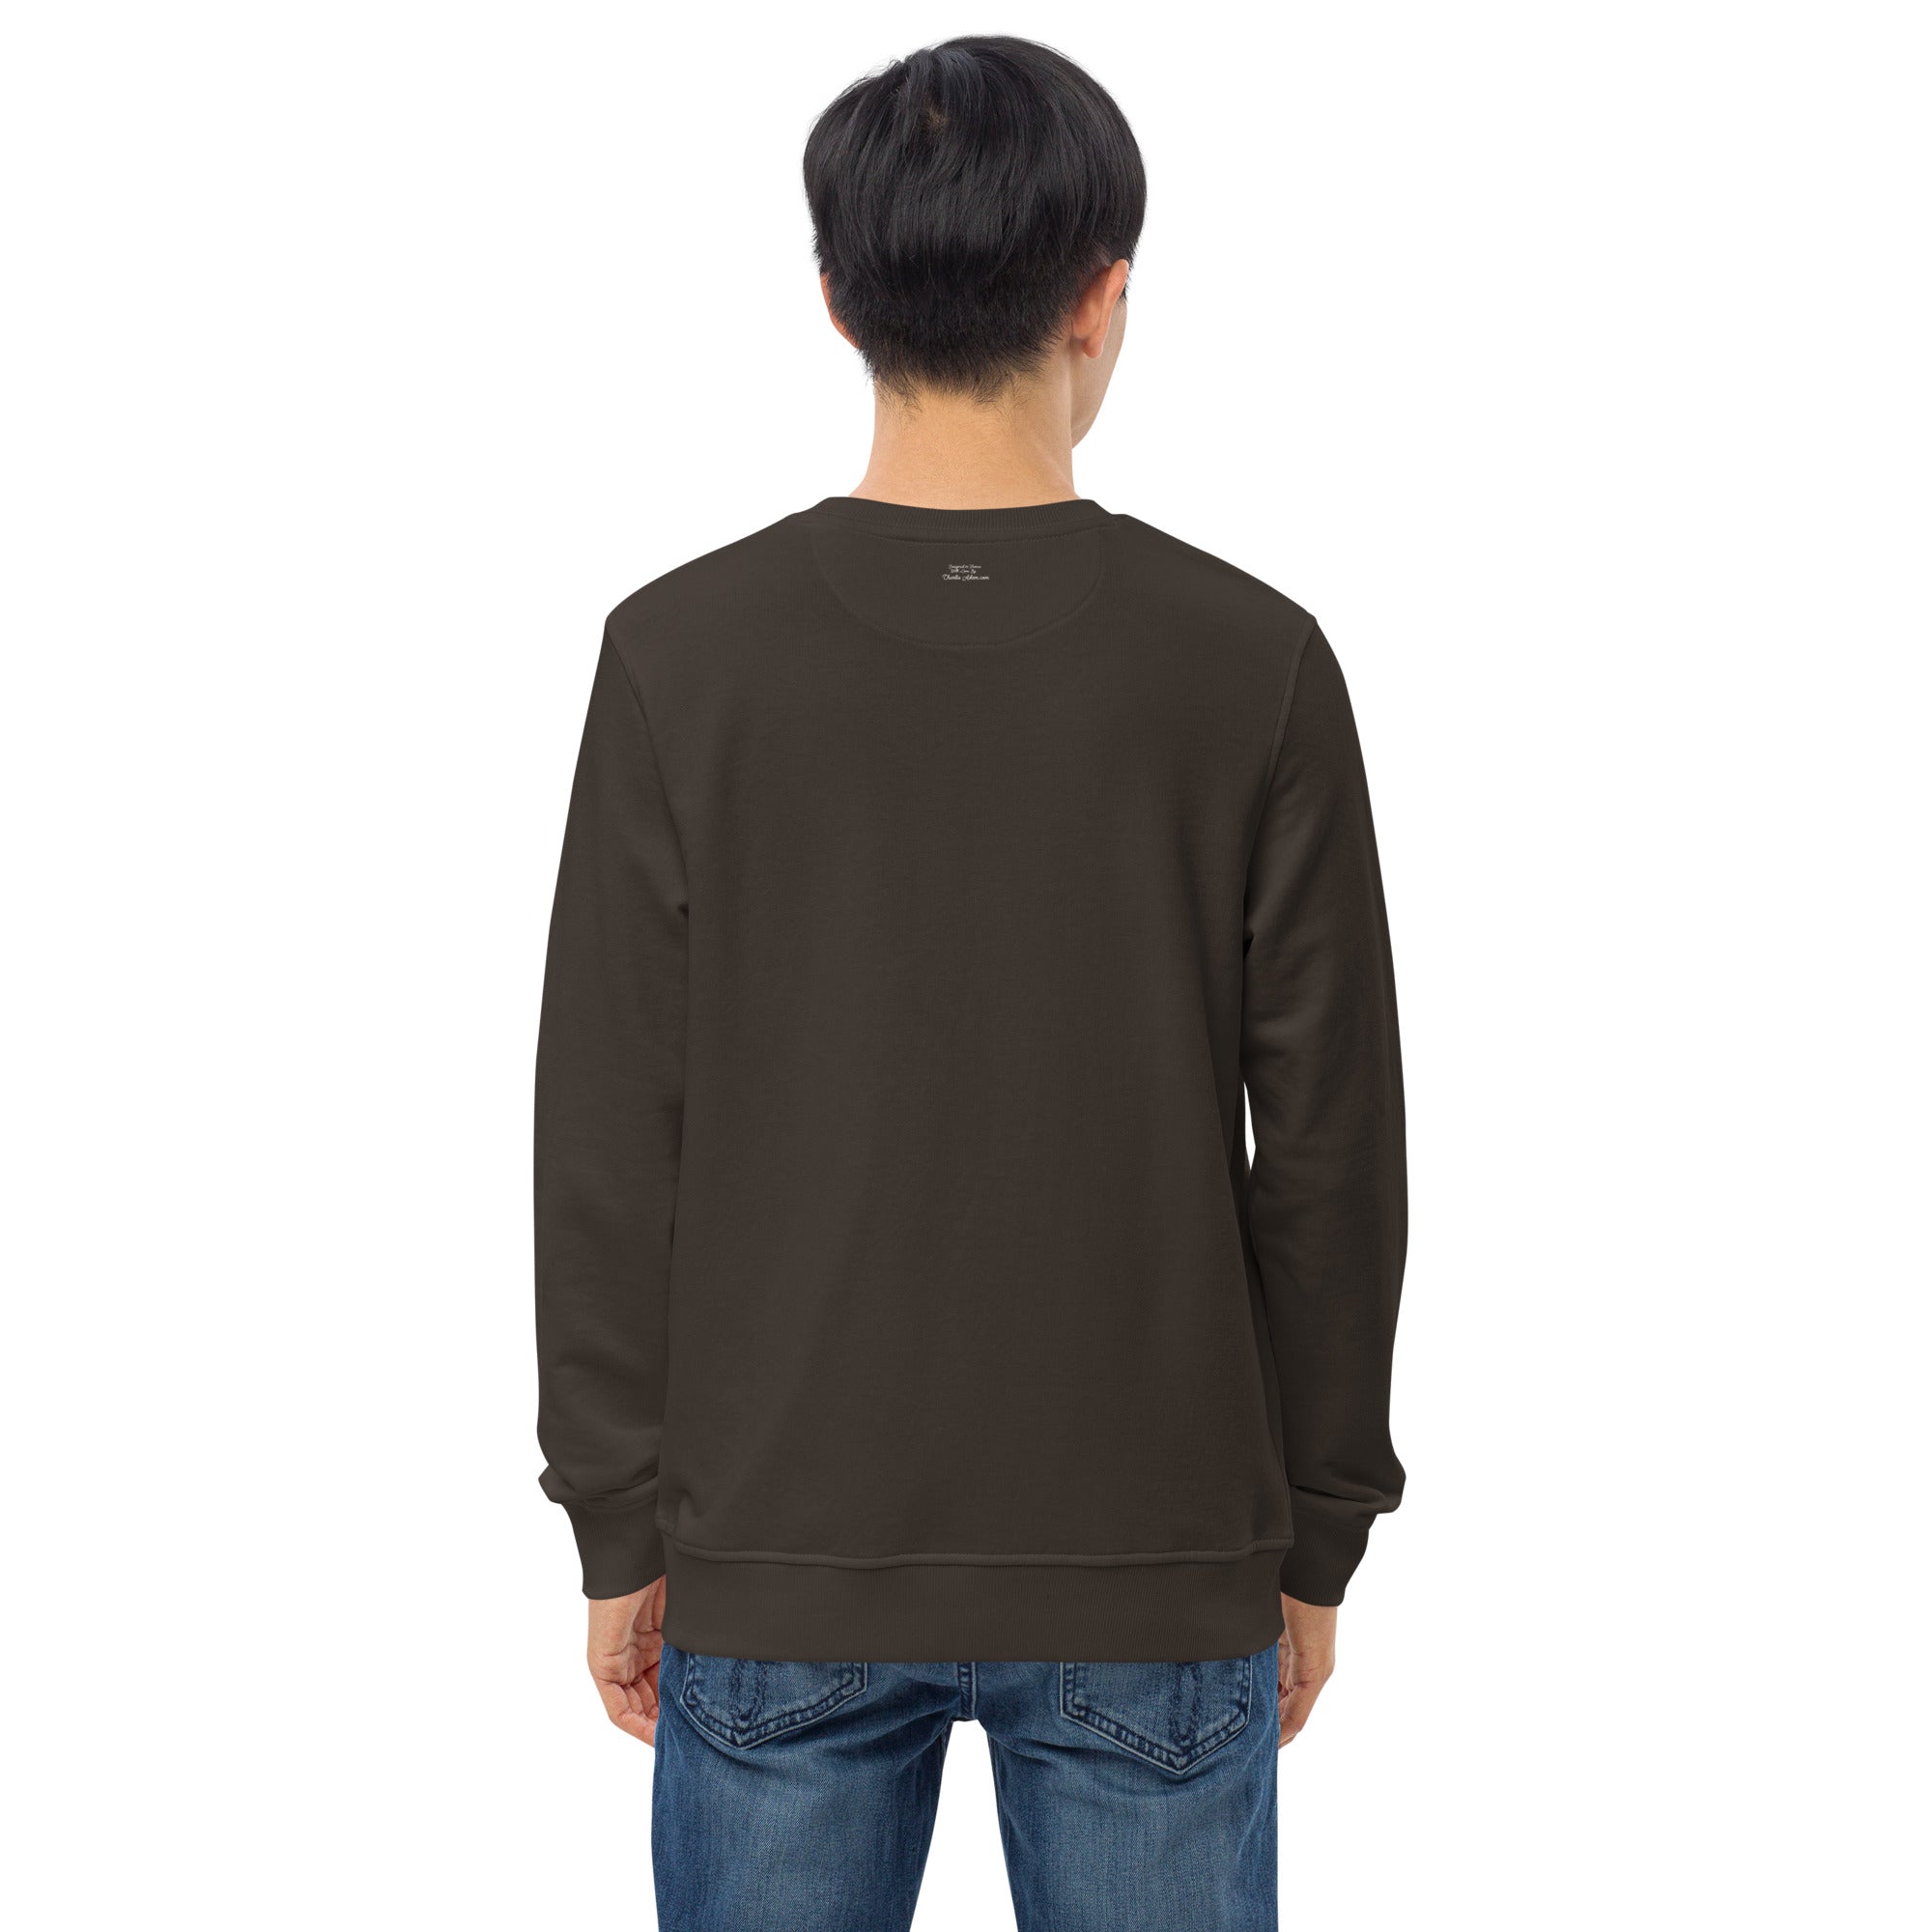 Unisex organic sweatshirt No Skiboots on Dancefloor light text